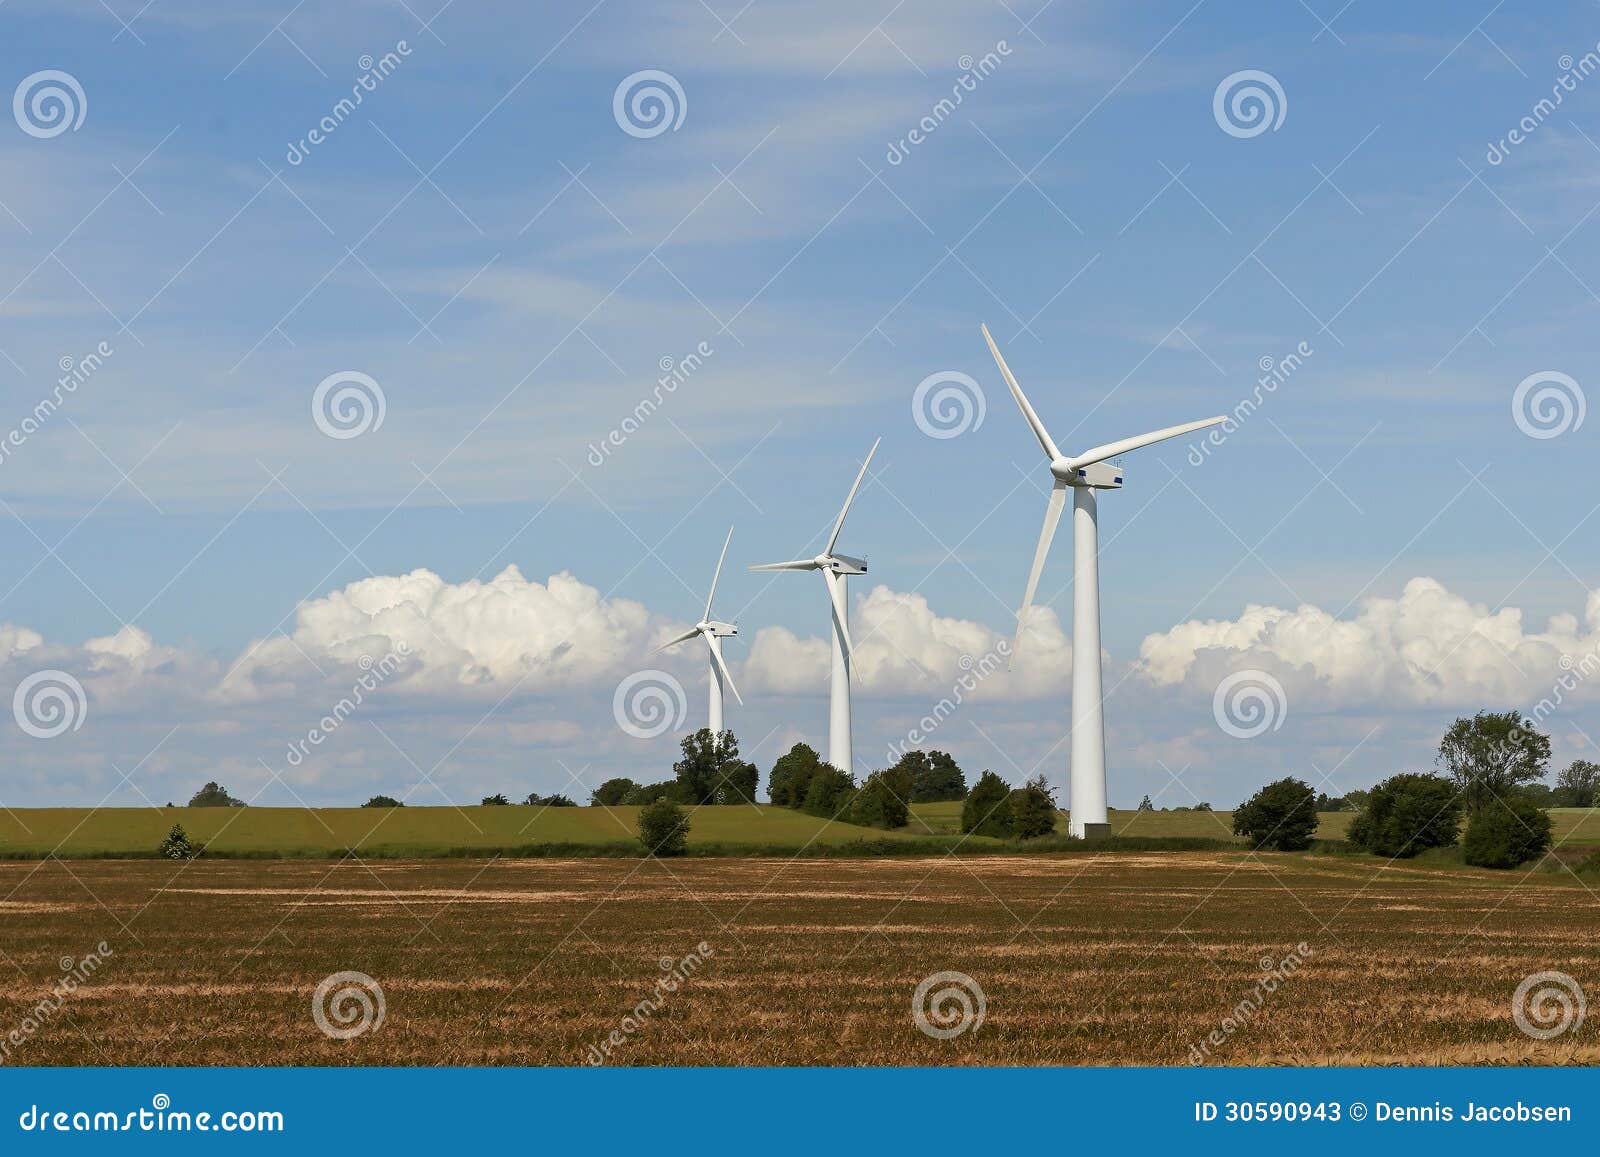 danish countryside with windmills